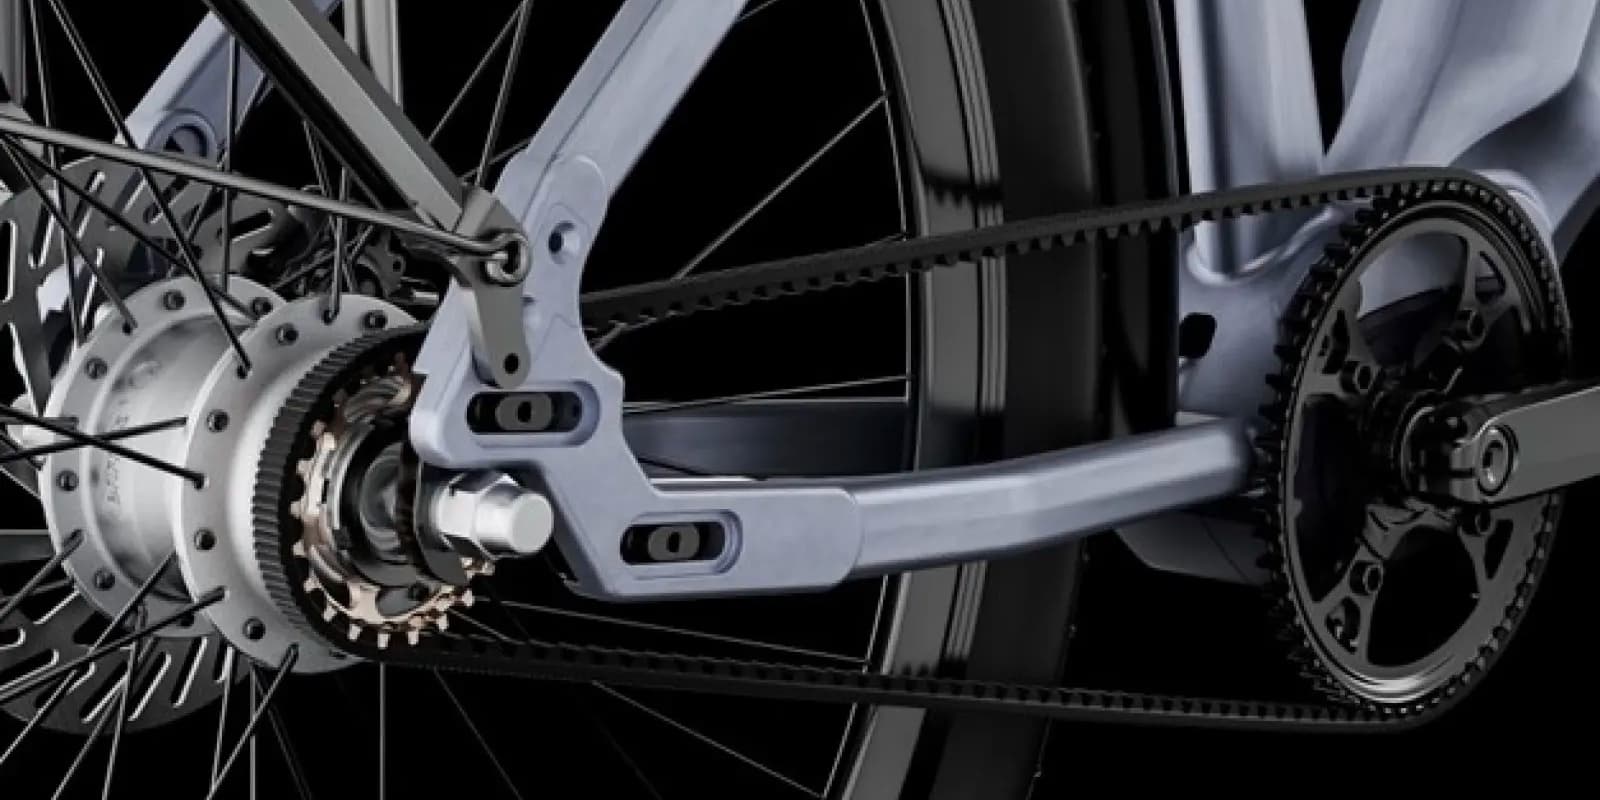 Bicycle Bike Install Removal Tools Hub/Tyre/Crankset/Bottom Bracket/Chain/Spokes 